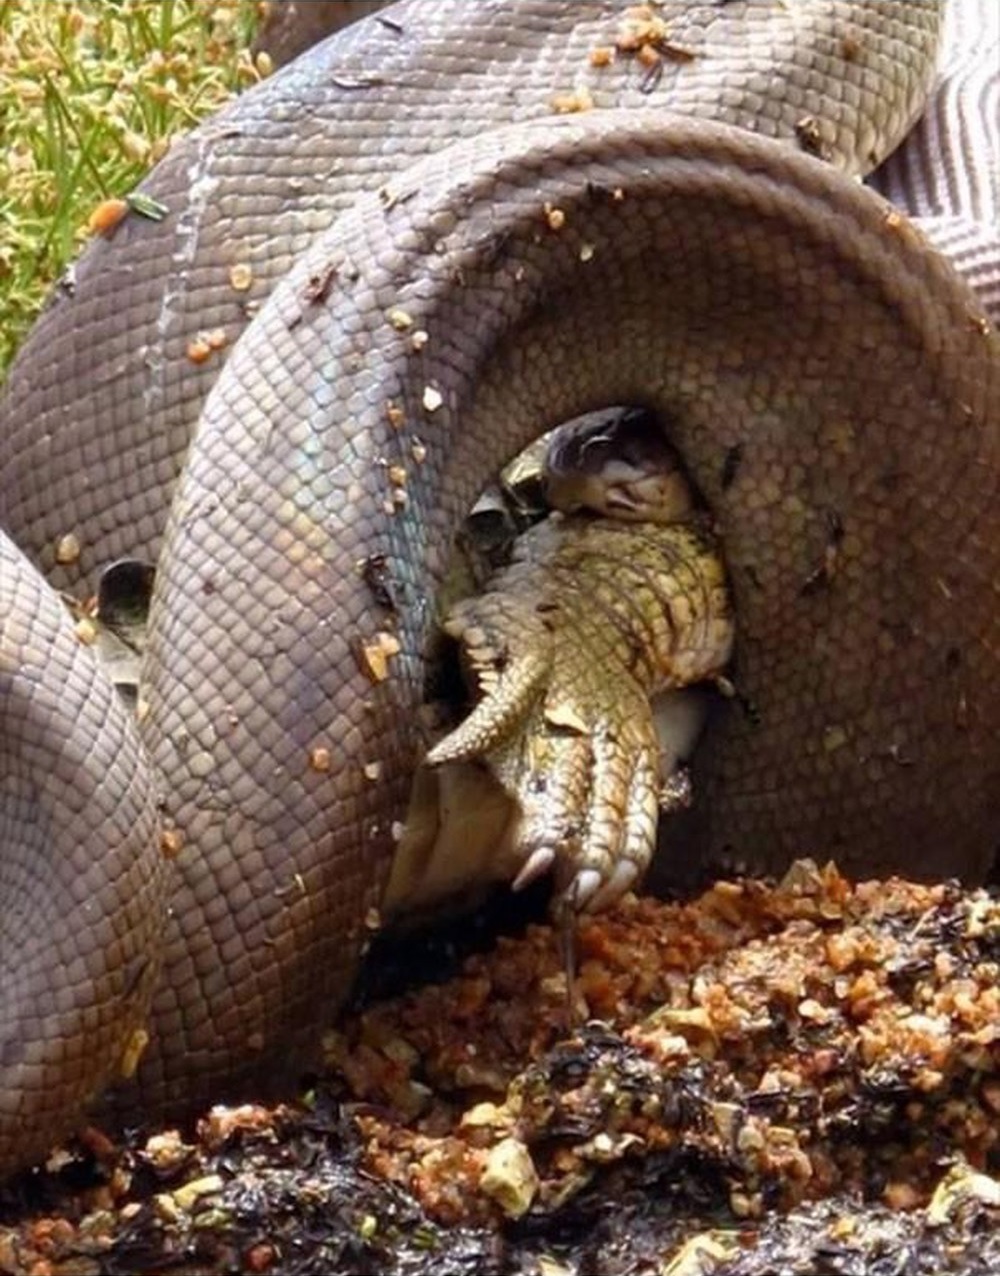 Anaconda eating an alligator